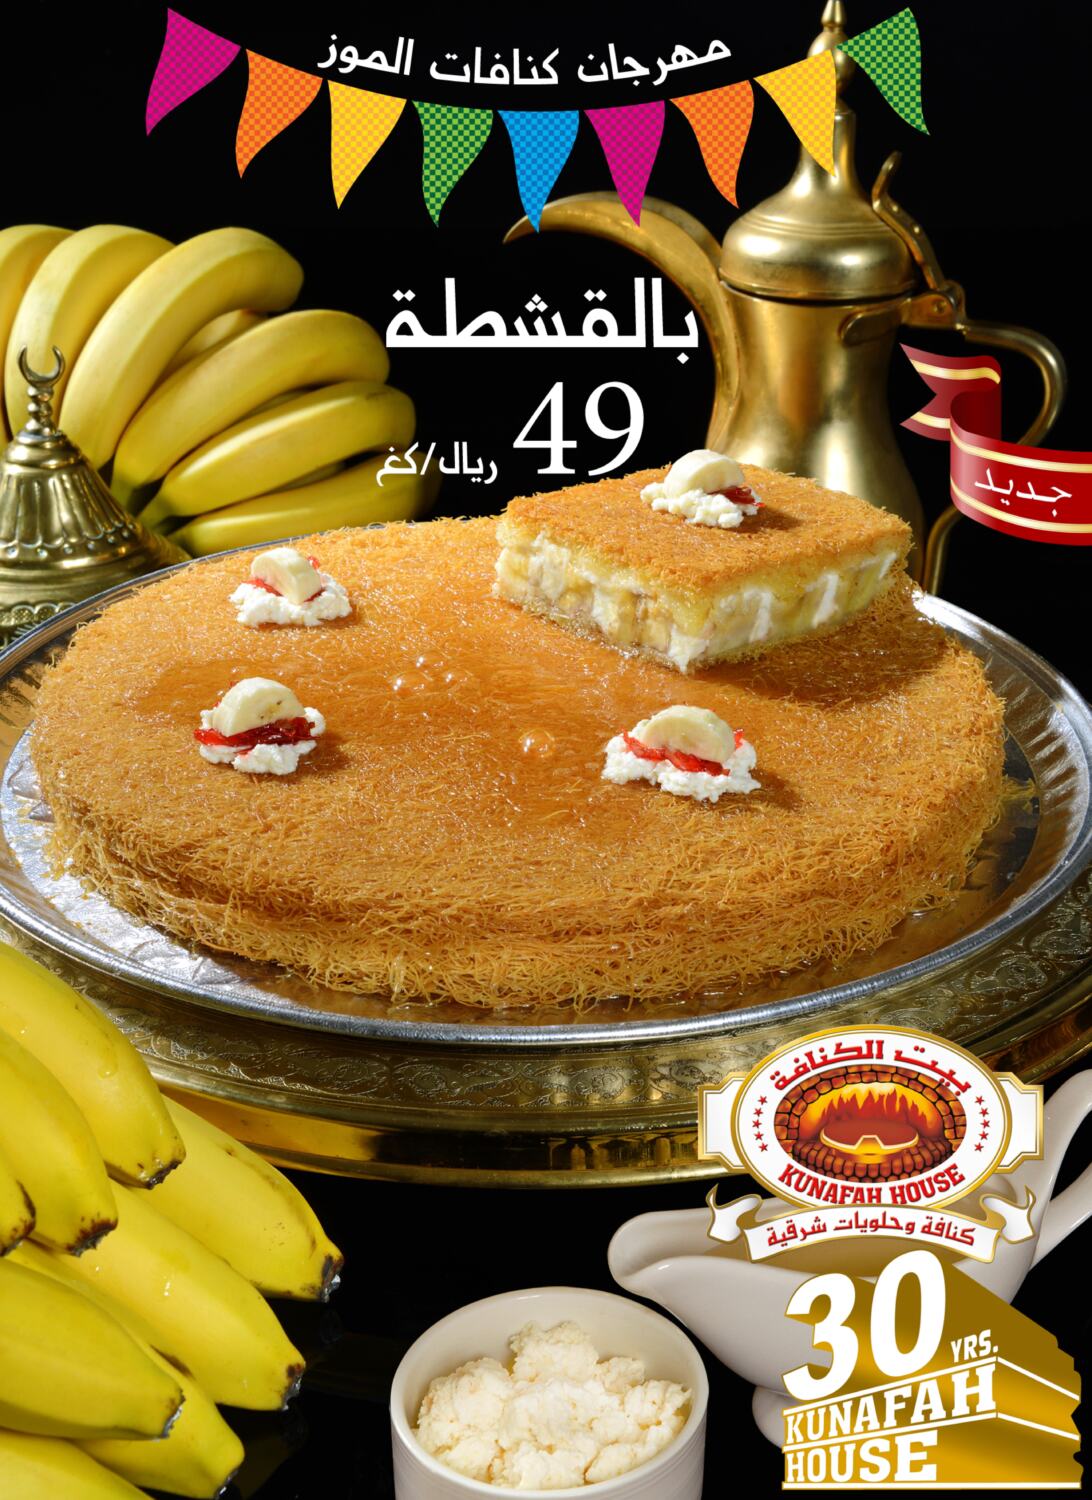 Kunafah House Banana Kunafah Festival in Saudi Arabia Offers - Saudi ...